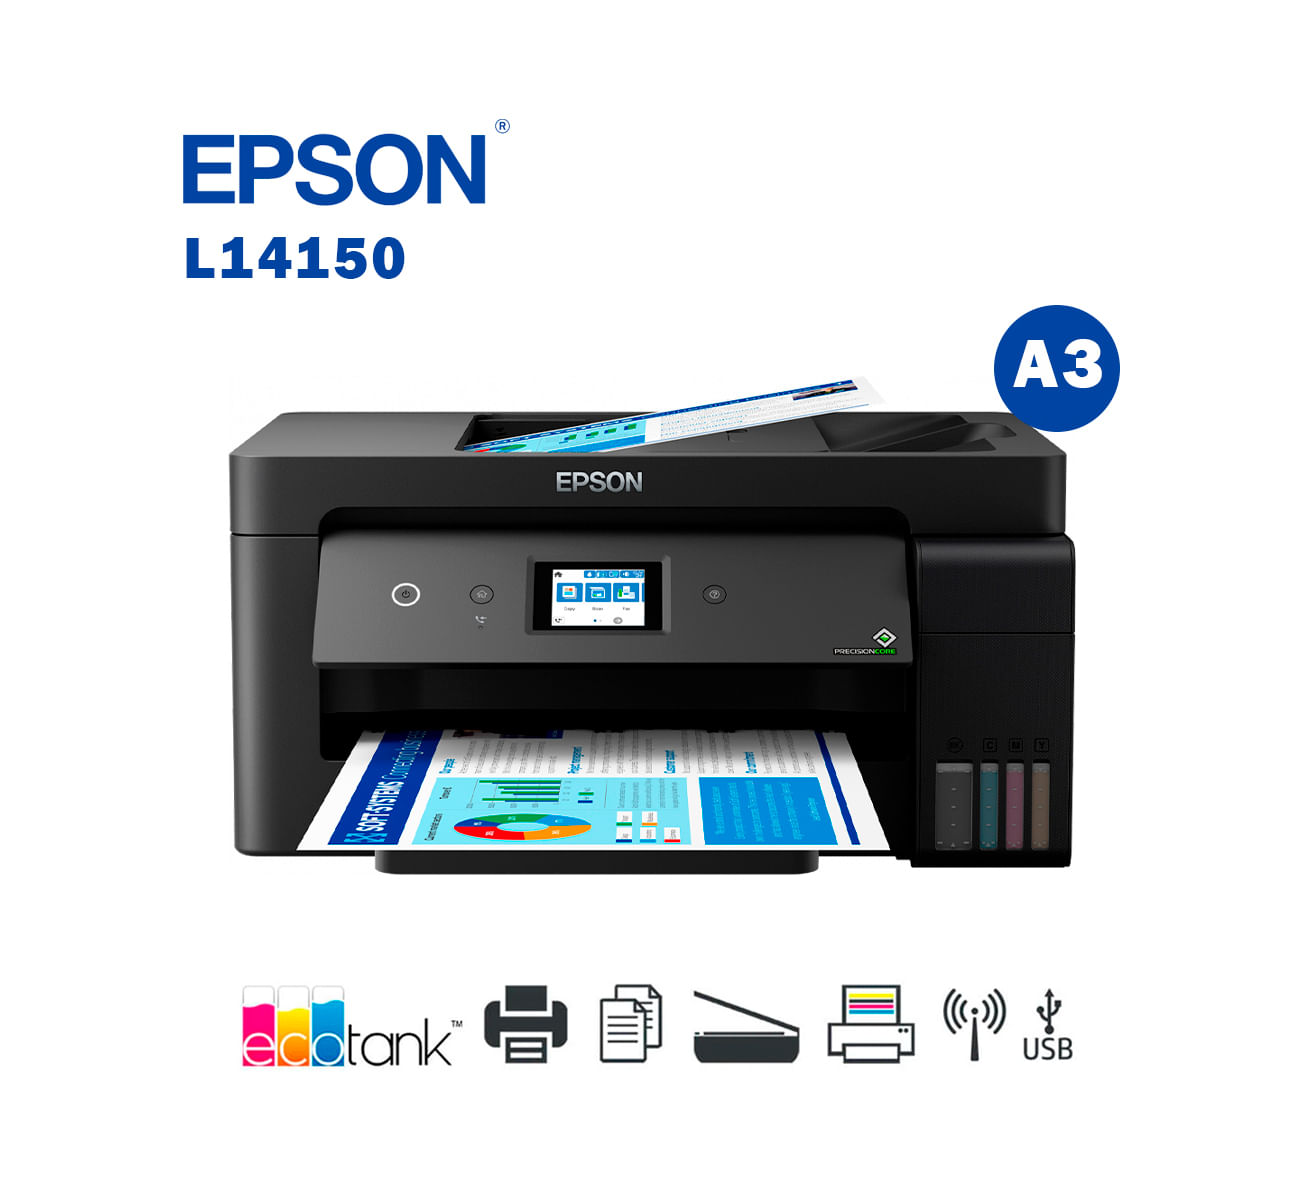 Impresora Multifuncional 3en1 Epson L3250 EcoTank Wifi Usb I Oechsle -  Oechsle